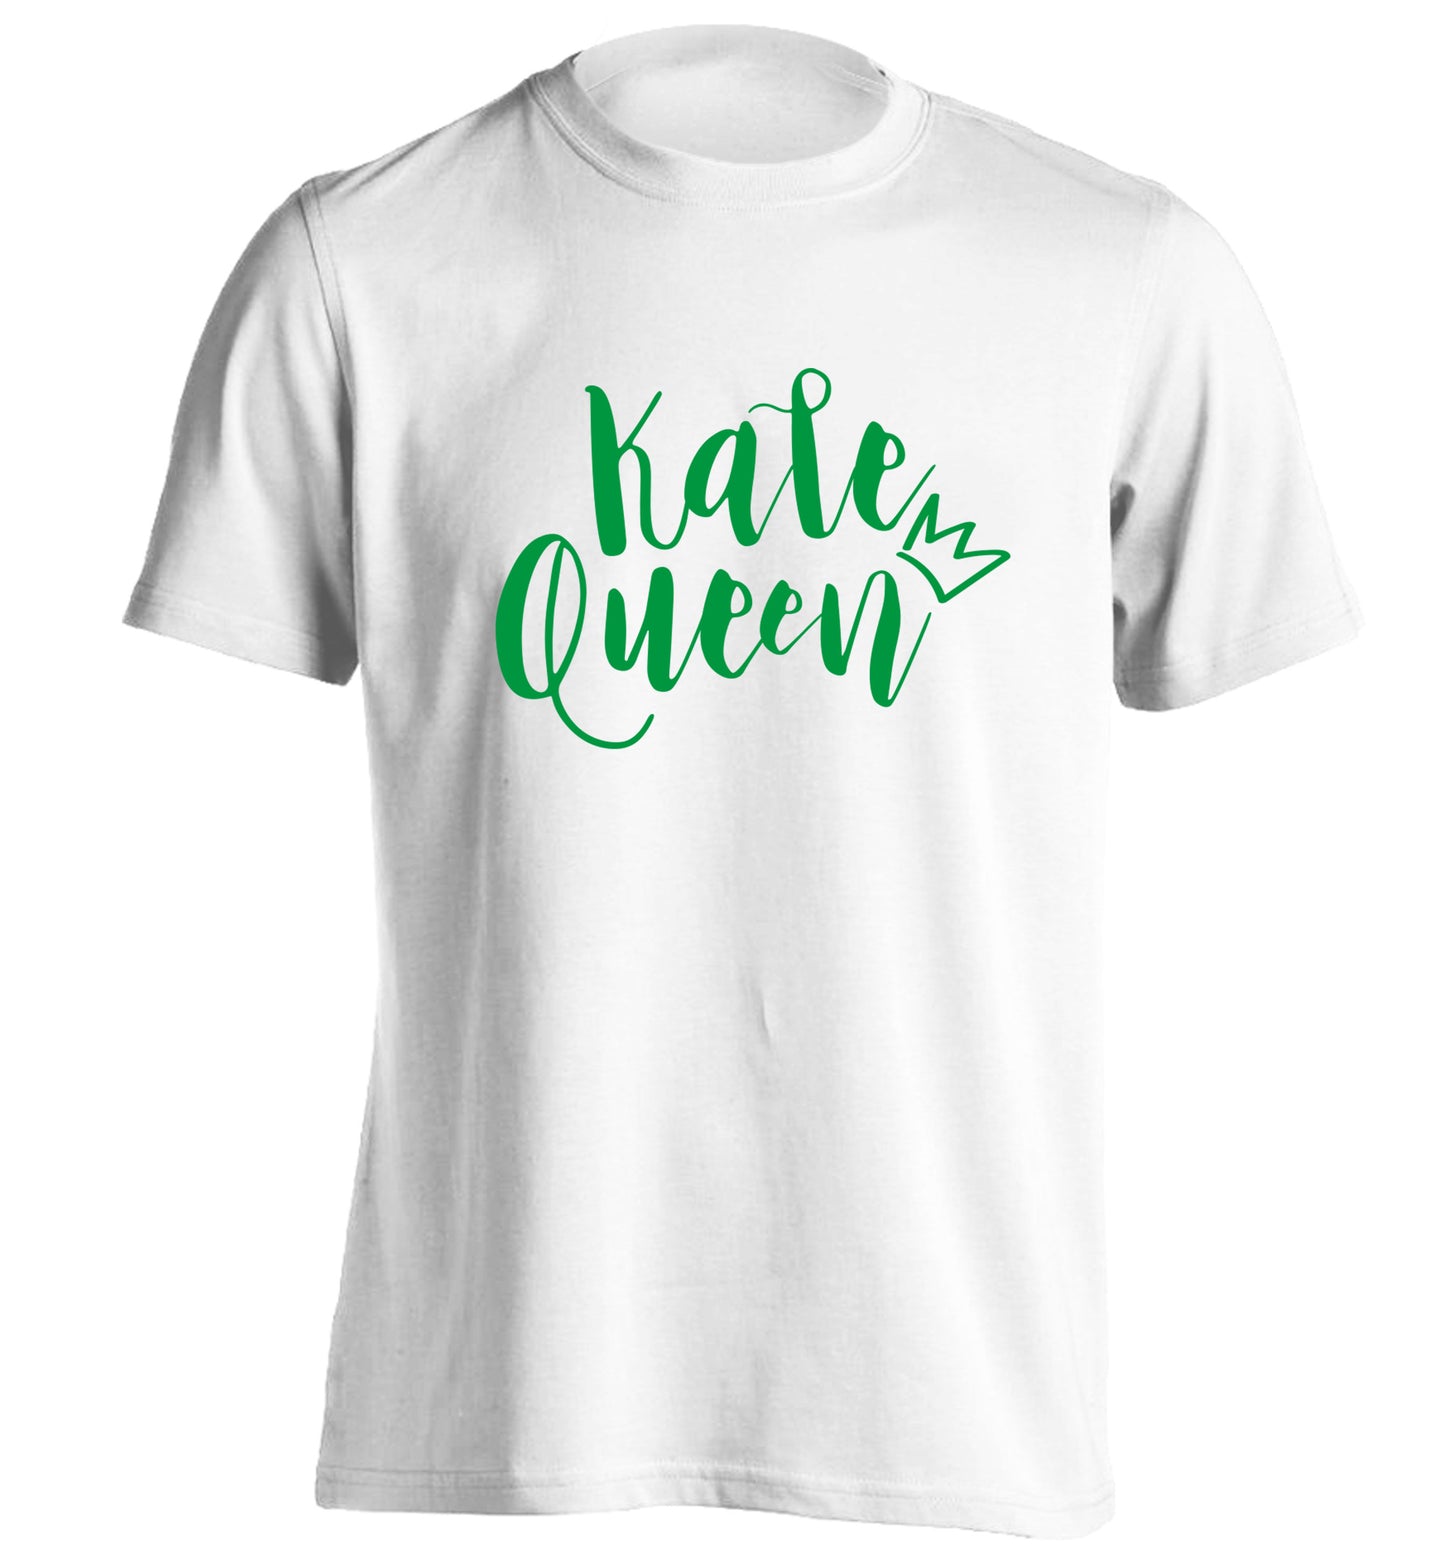 Kale Queen adults unisex white Tshirt 2XL